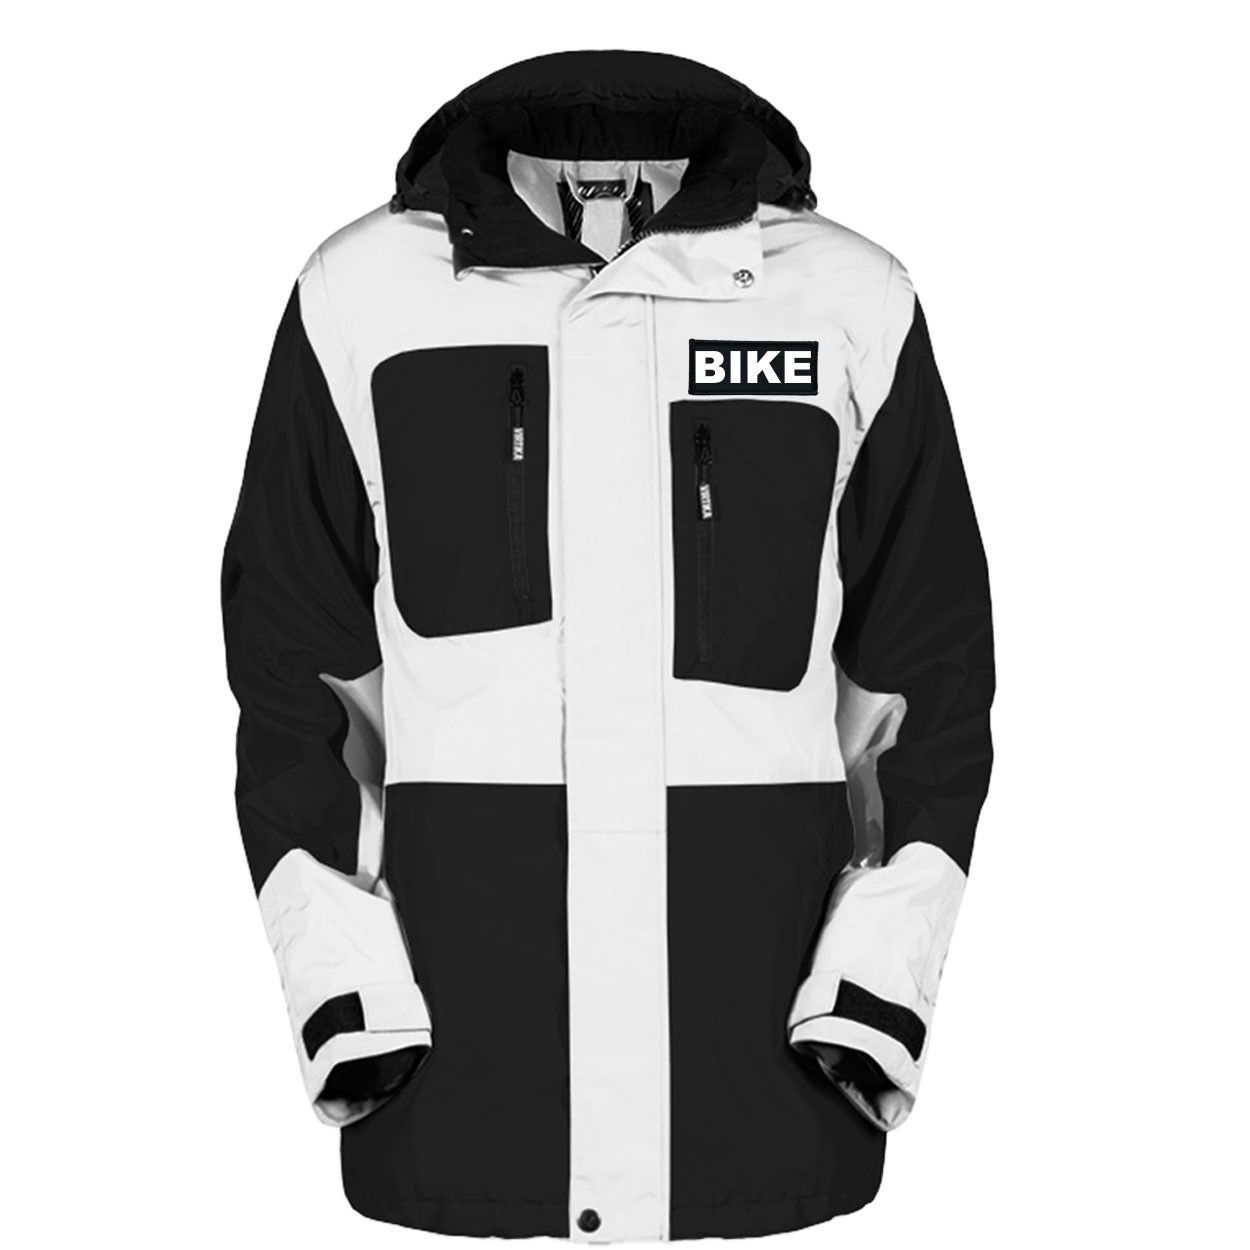 Bike Brand Logo Classic Woven Patch Pro Snowboard Jacket (Black/White)